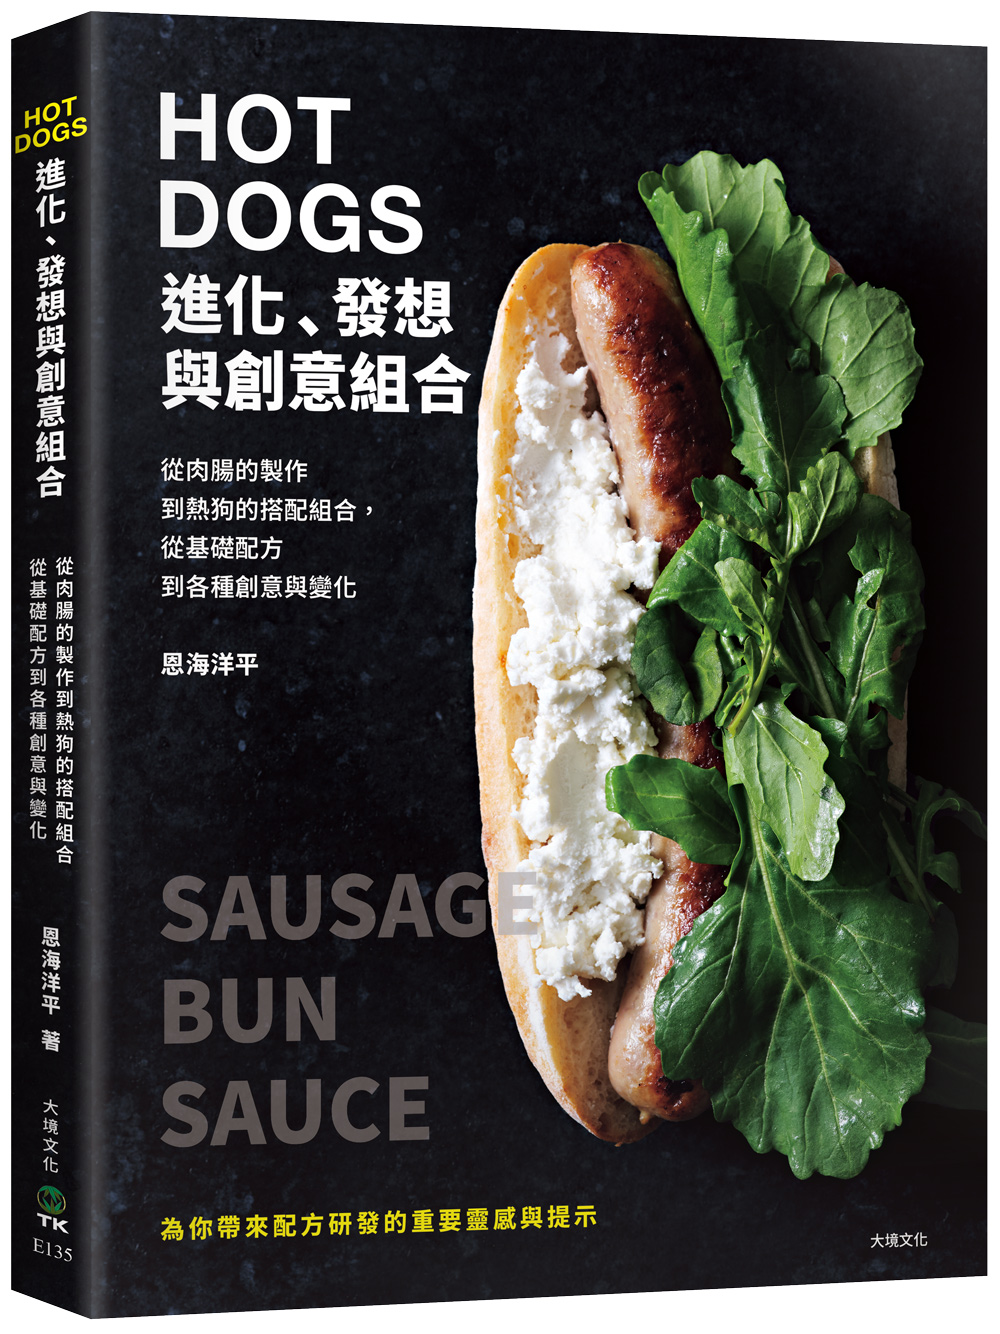 HOT DOGS的進化、發想與創意組合: 榮獲日本IFFA金獎! 肉腸製作、商品化策略、食材的原創變化, 初學者與專業廚師都不能錯過!